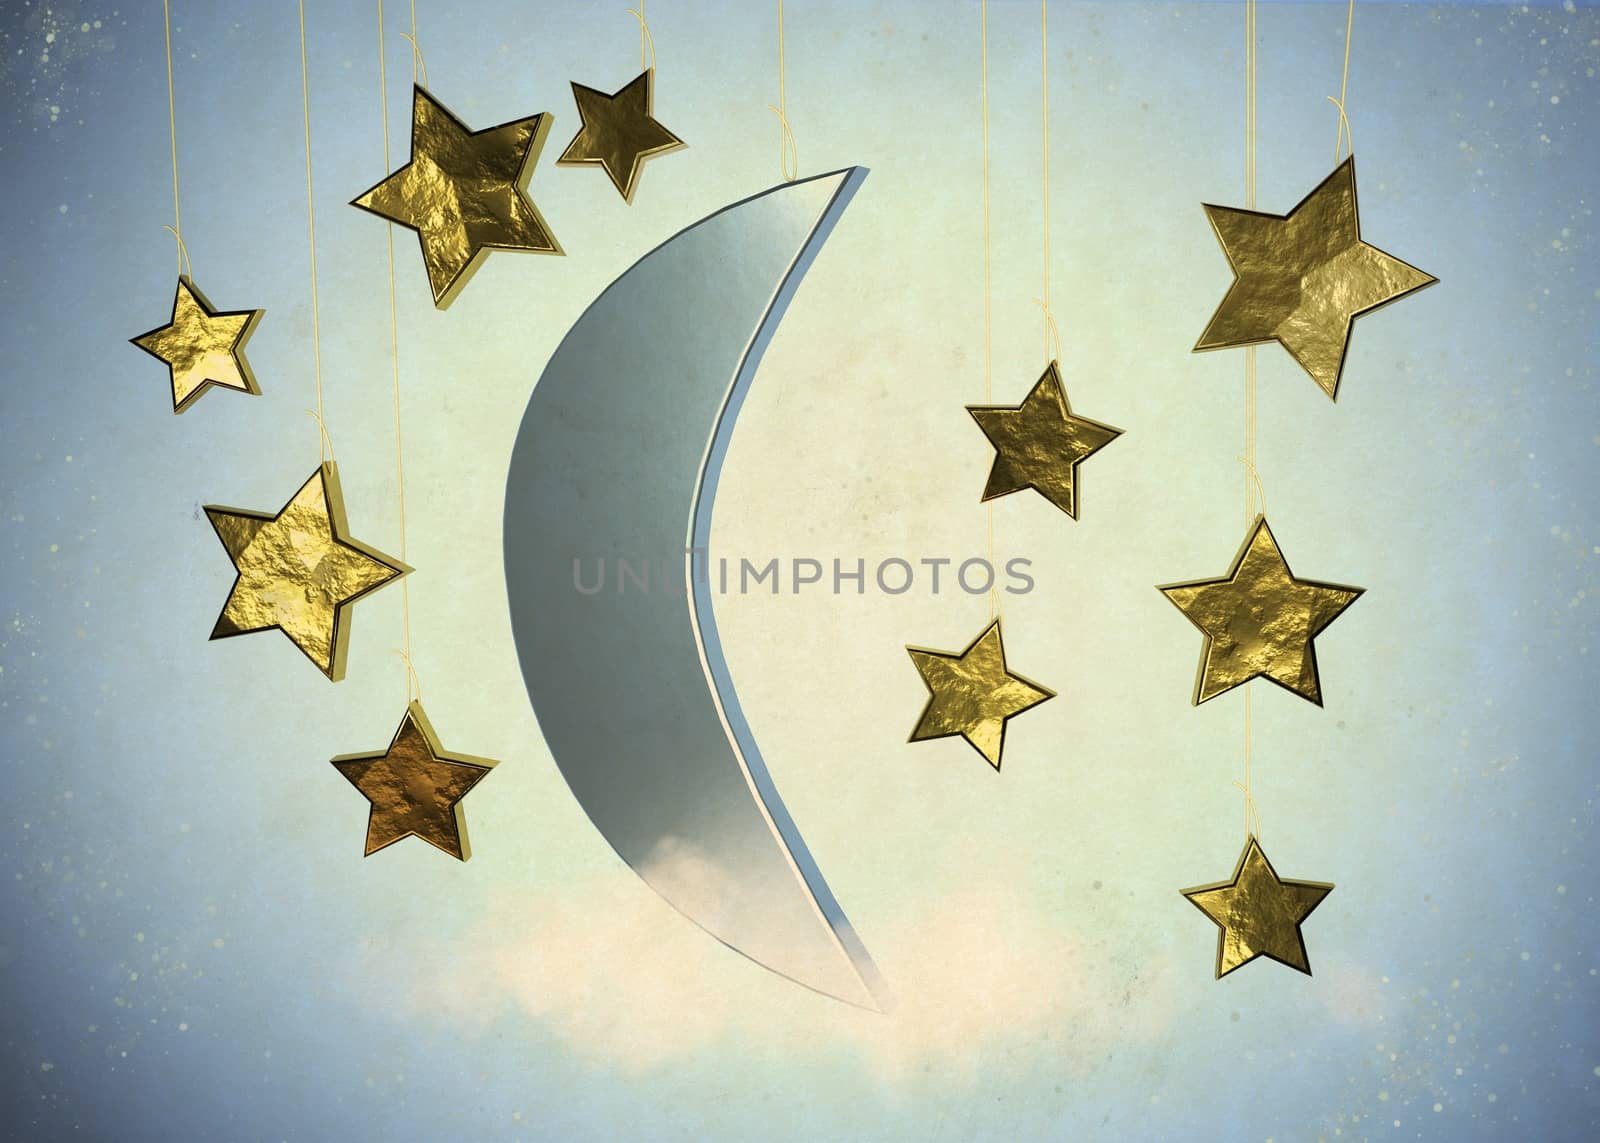 Moon and stars by Onigiristudio